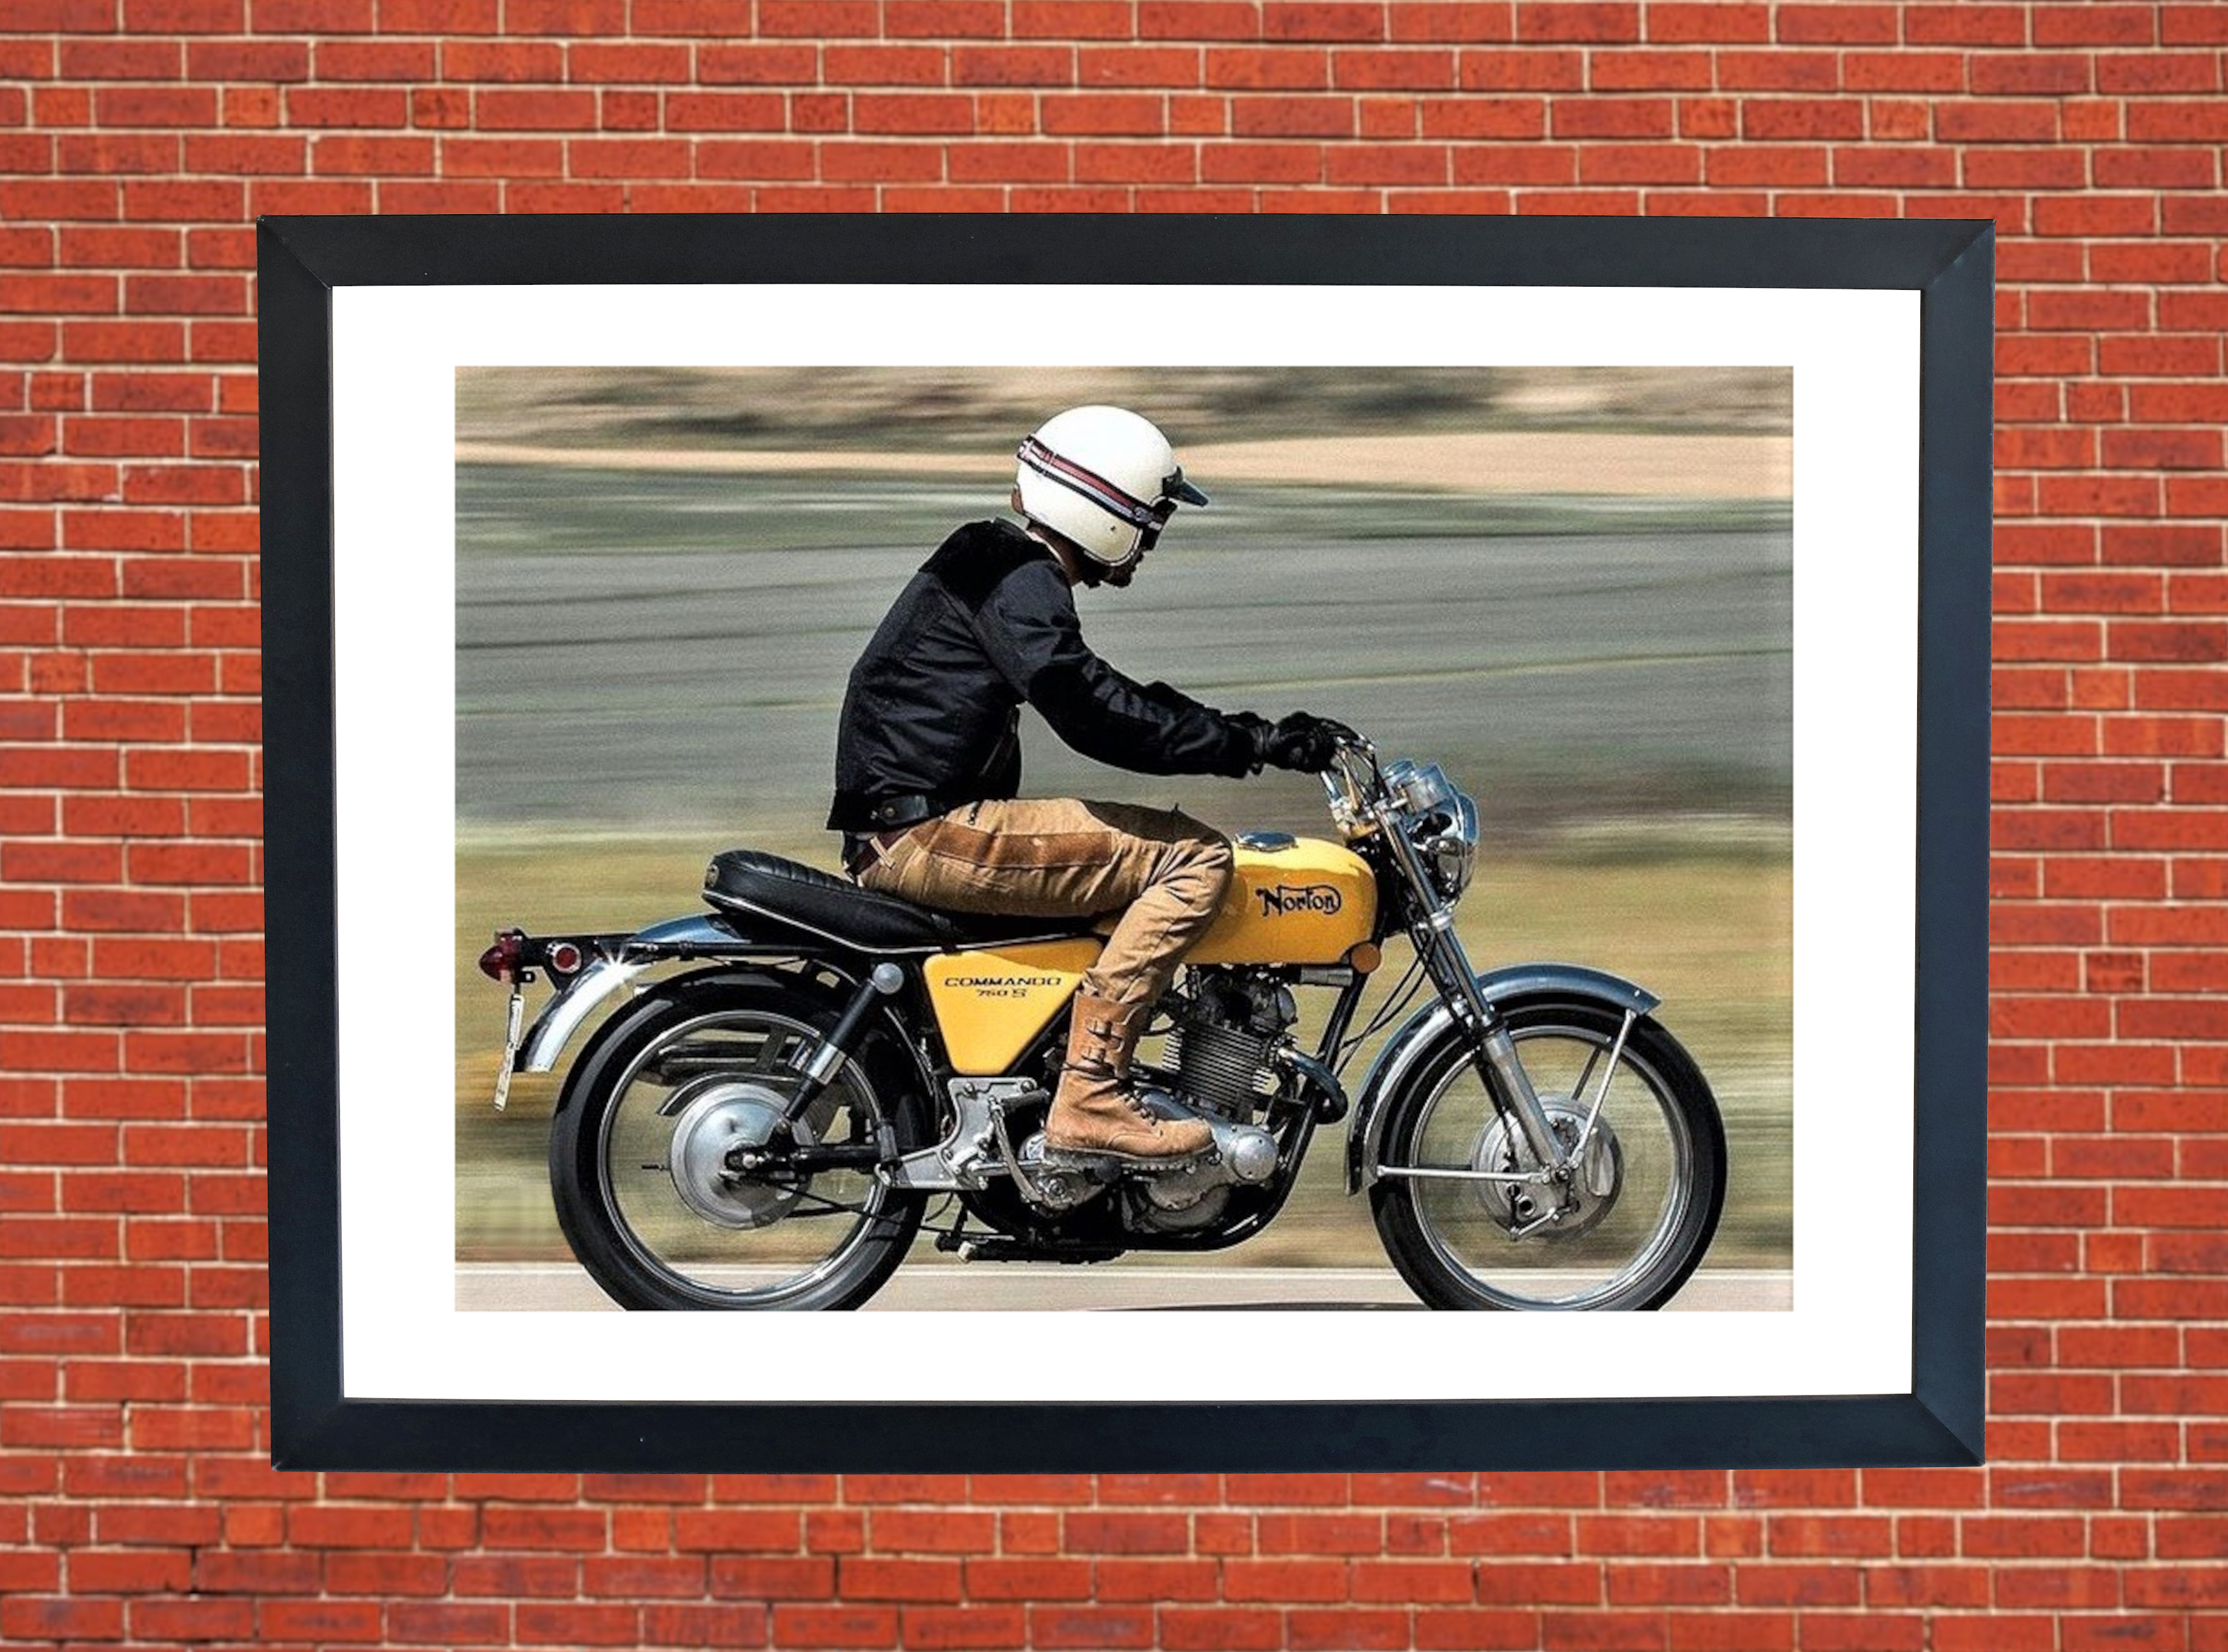 Norton Commando 750 S Motorbike Motorcycle - A4 Size Print Poster